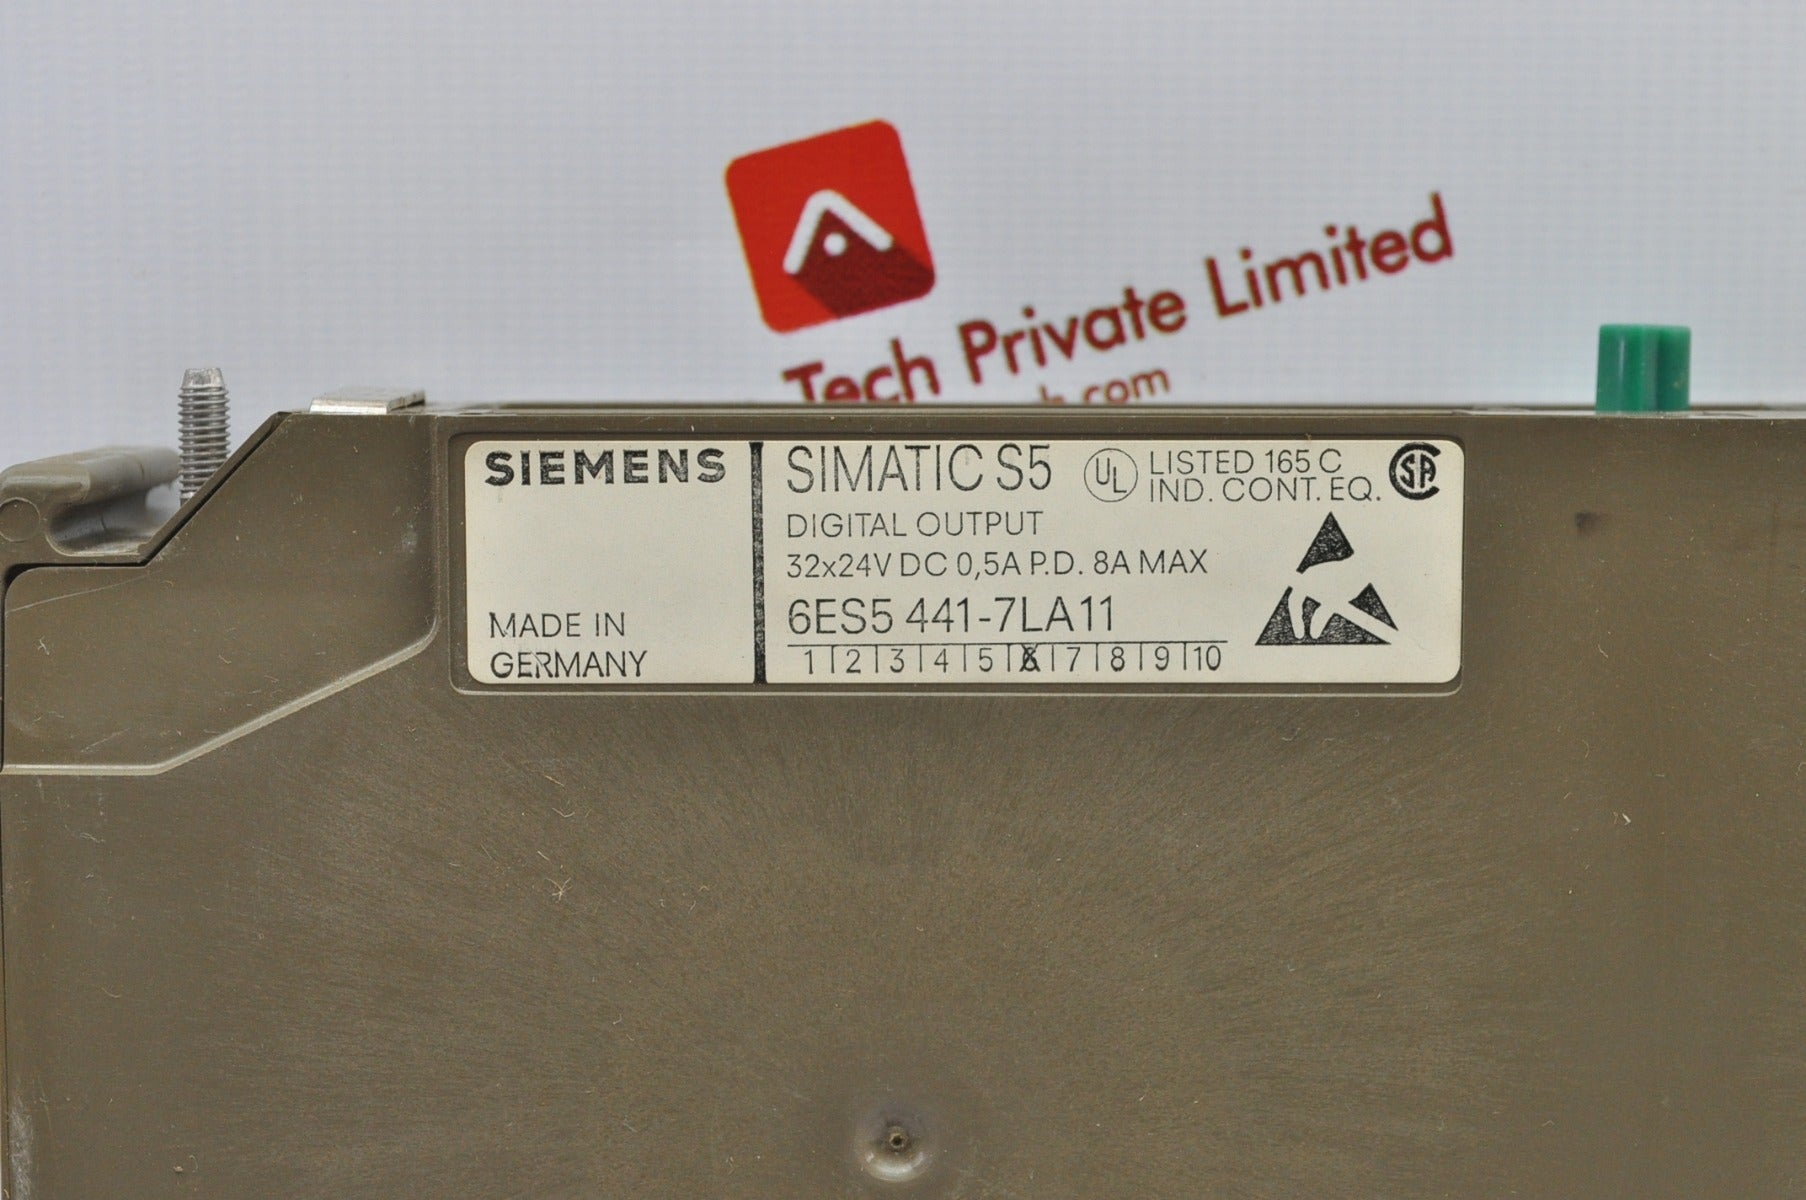 Siemens Simatic S5 6Es5 441-7La11 Digital Output Module